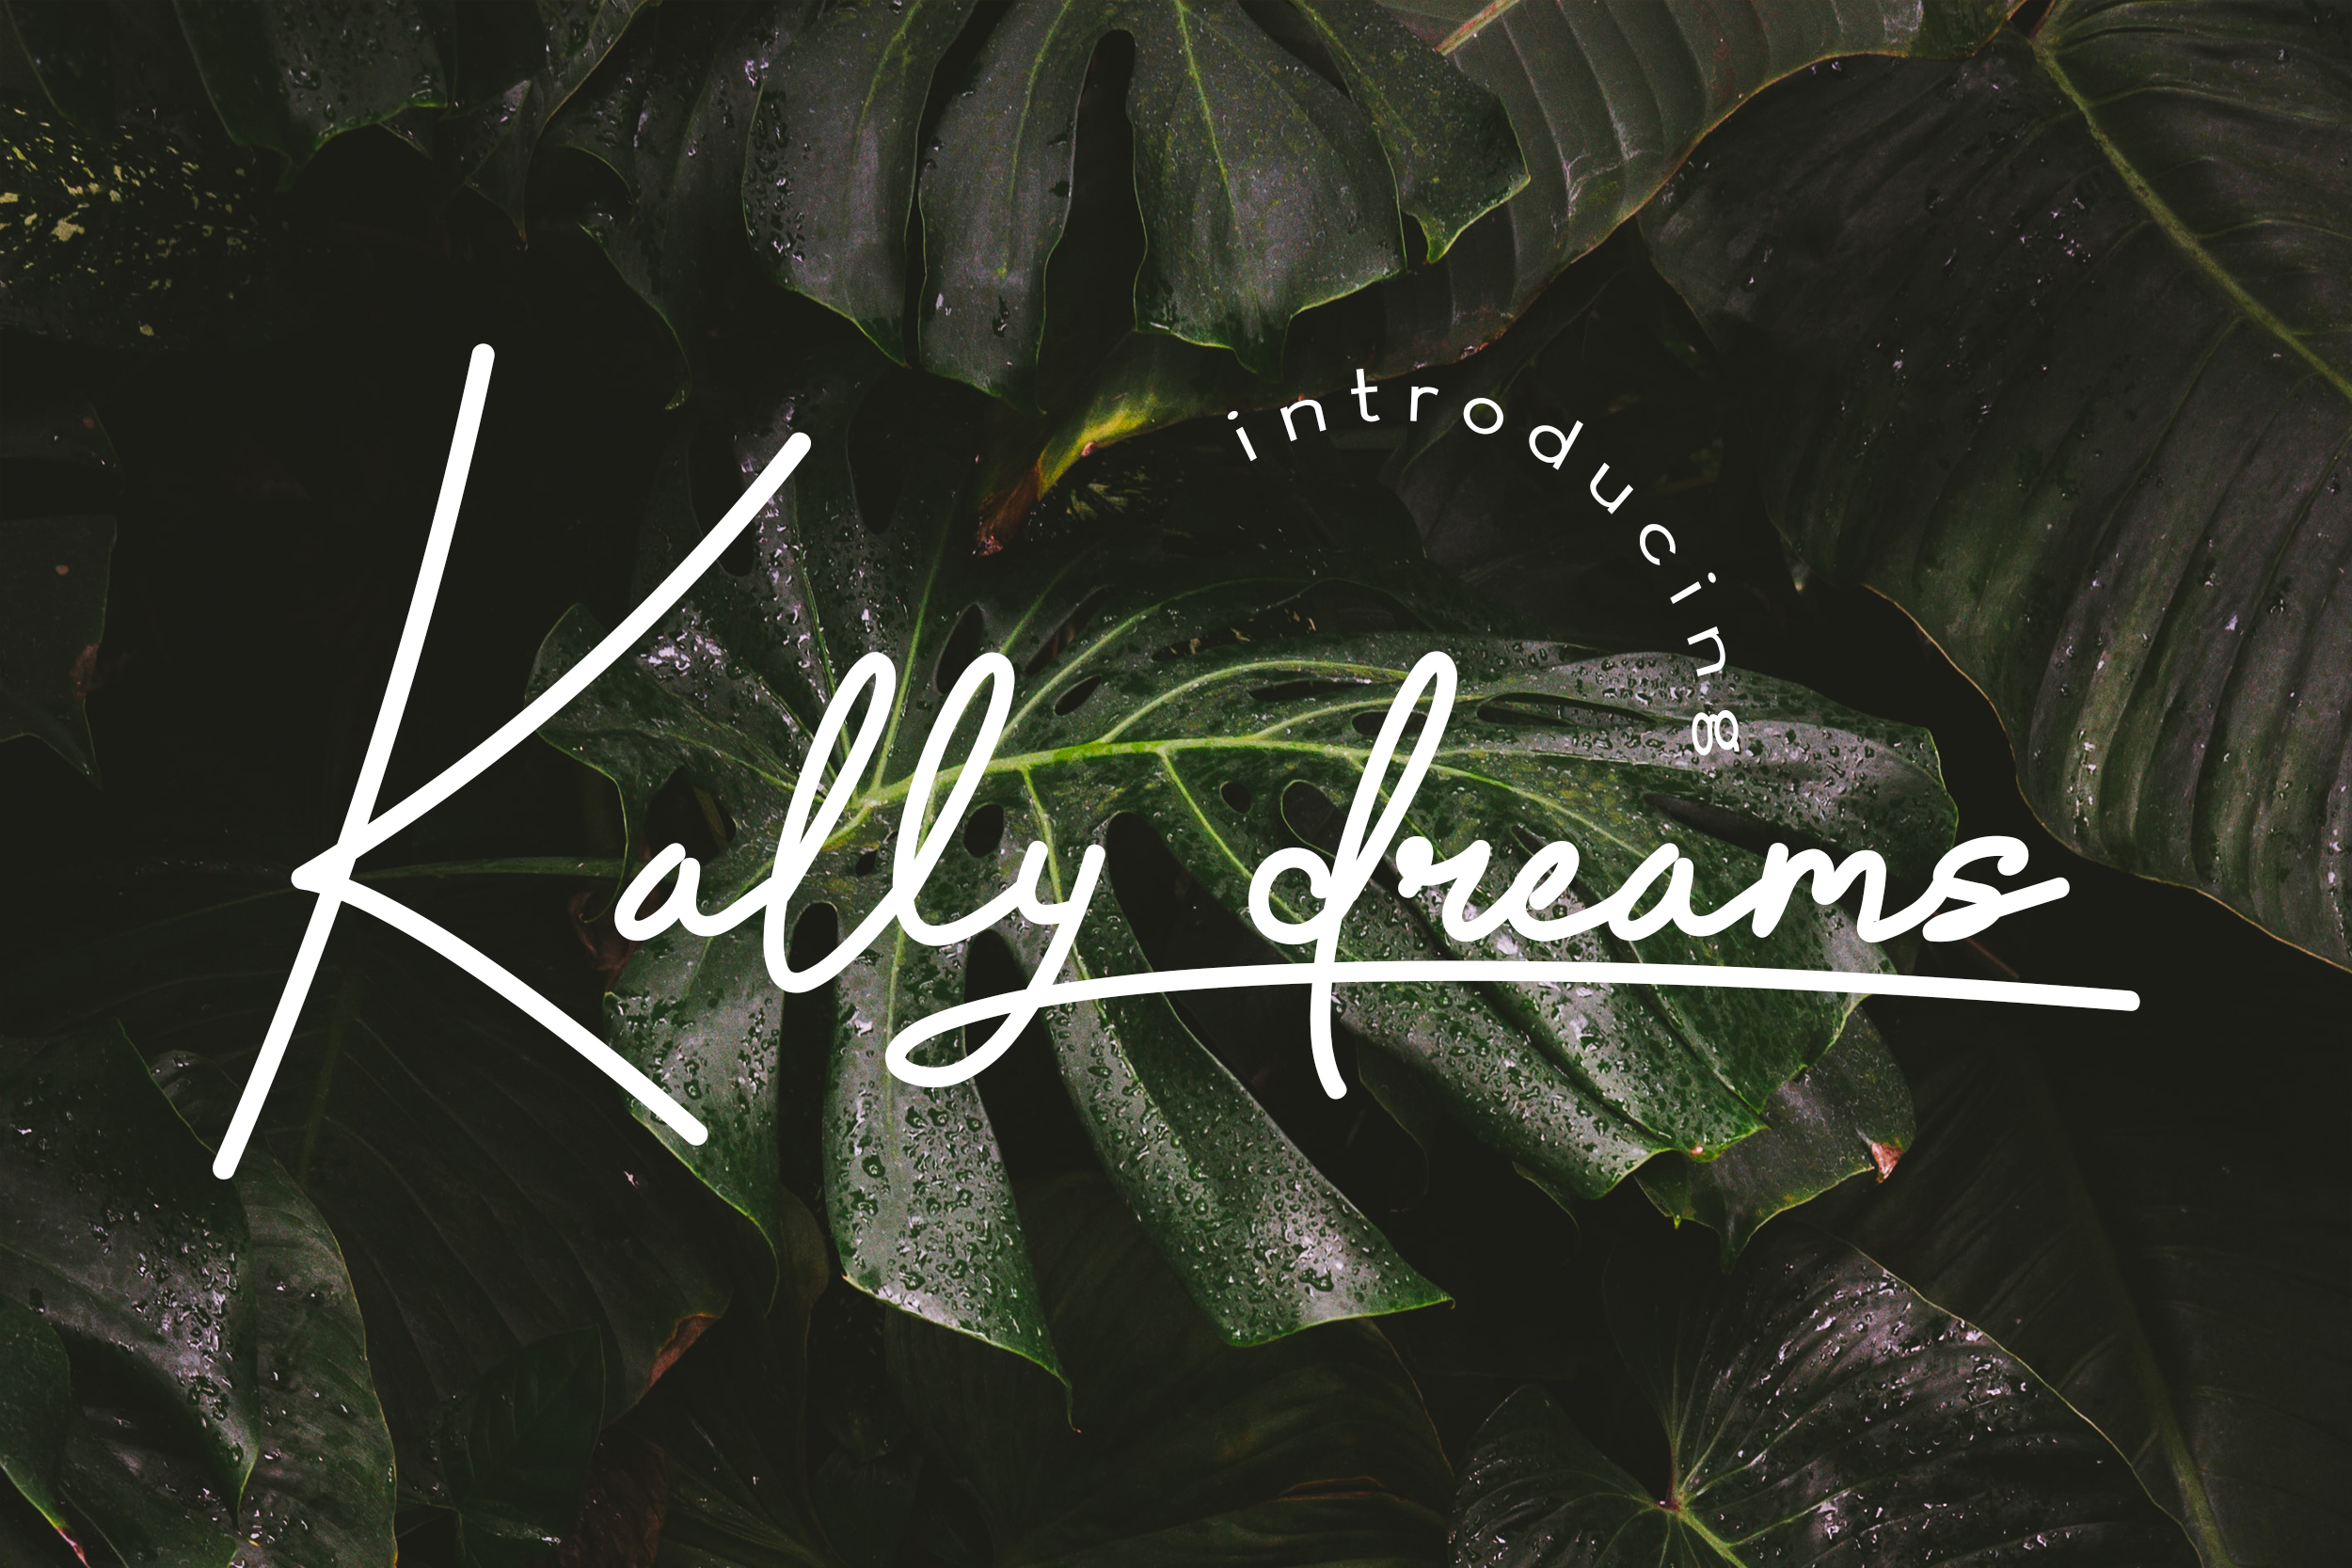 Kally dreams